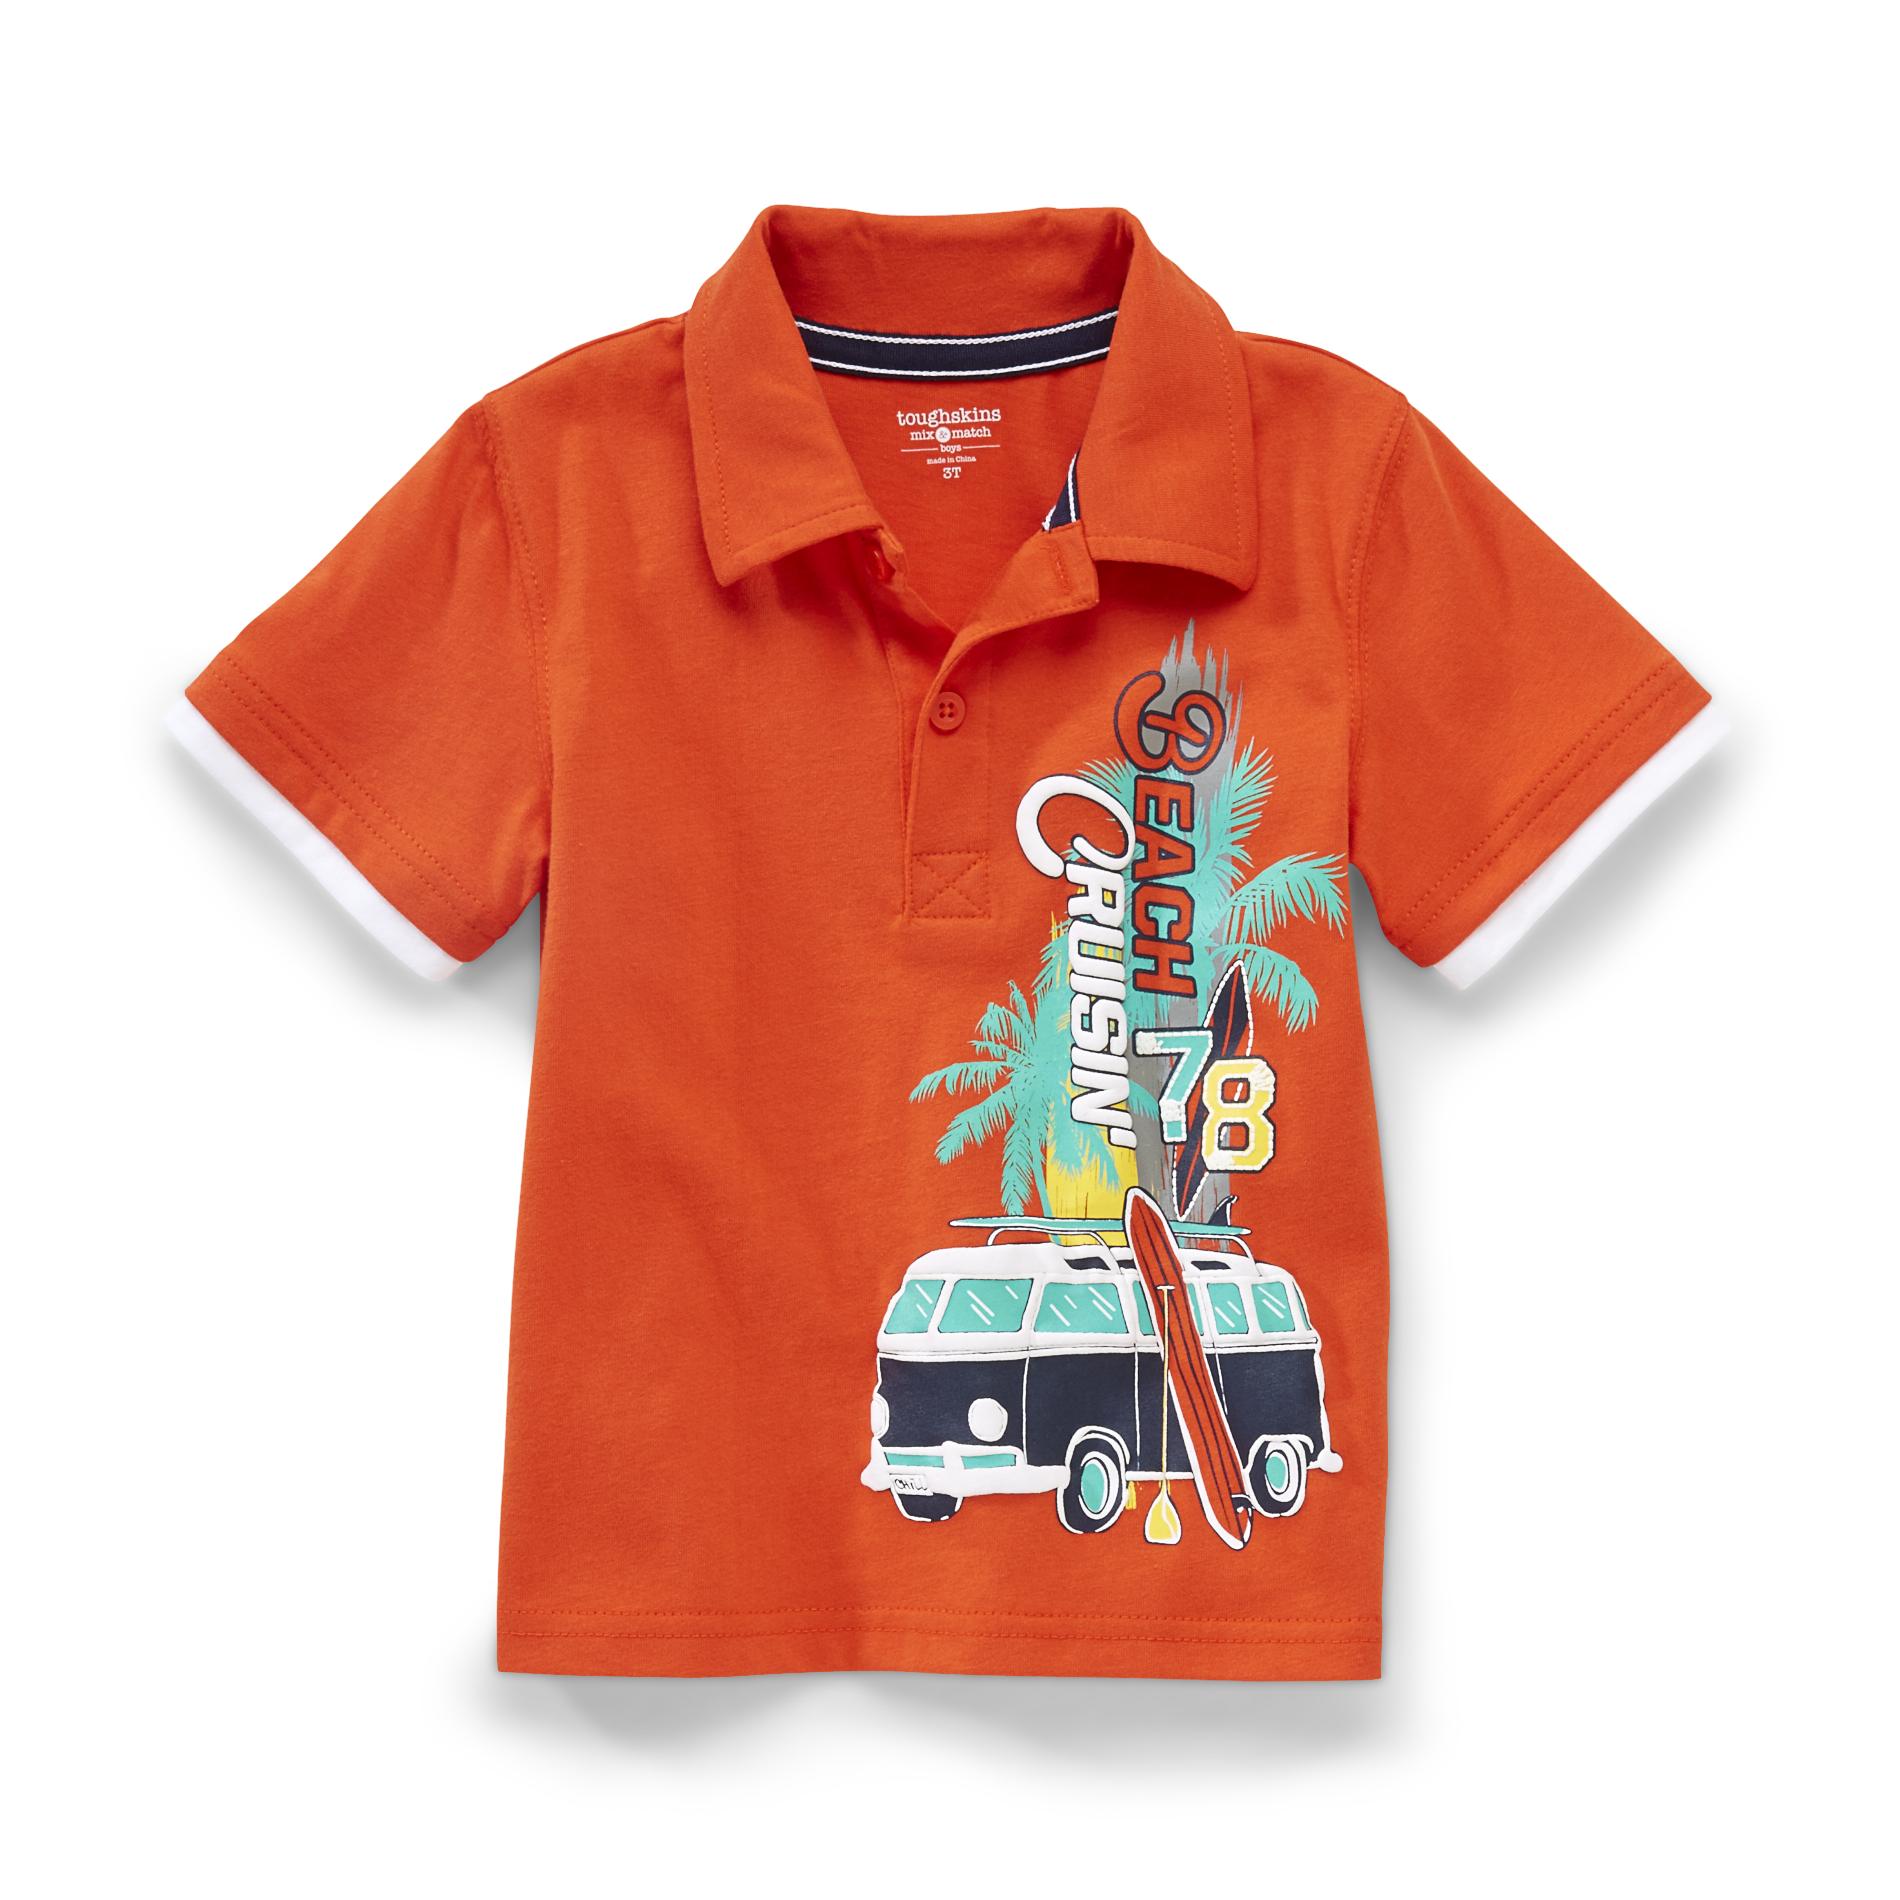 Toughskins Infant & Toddler Boy's Graphic Polo Shirt - Beach